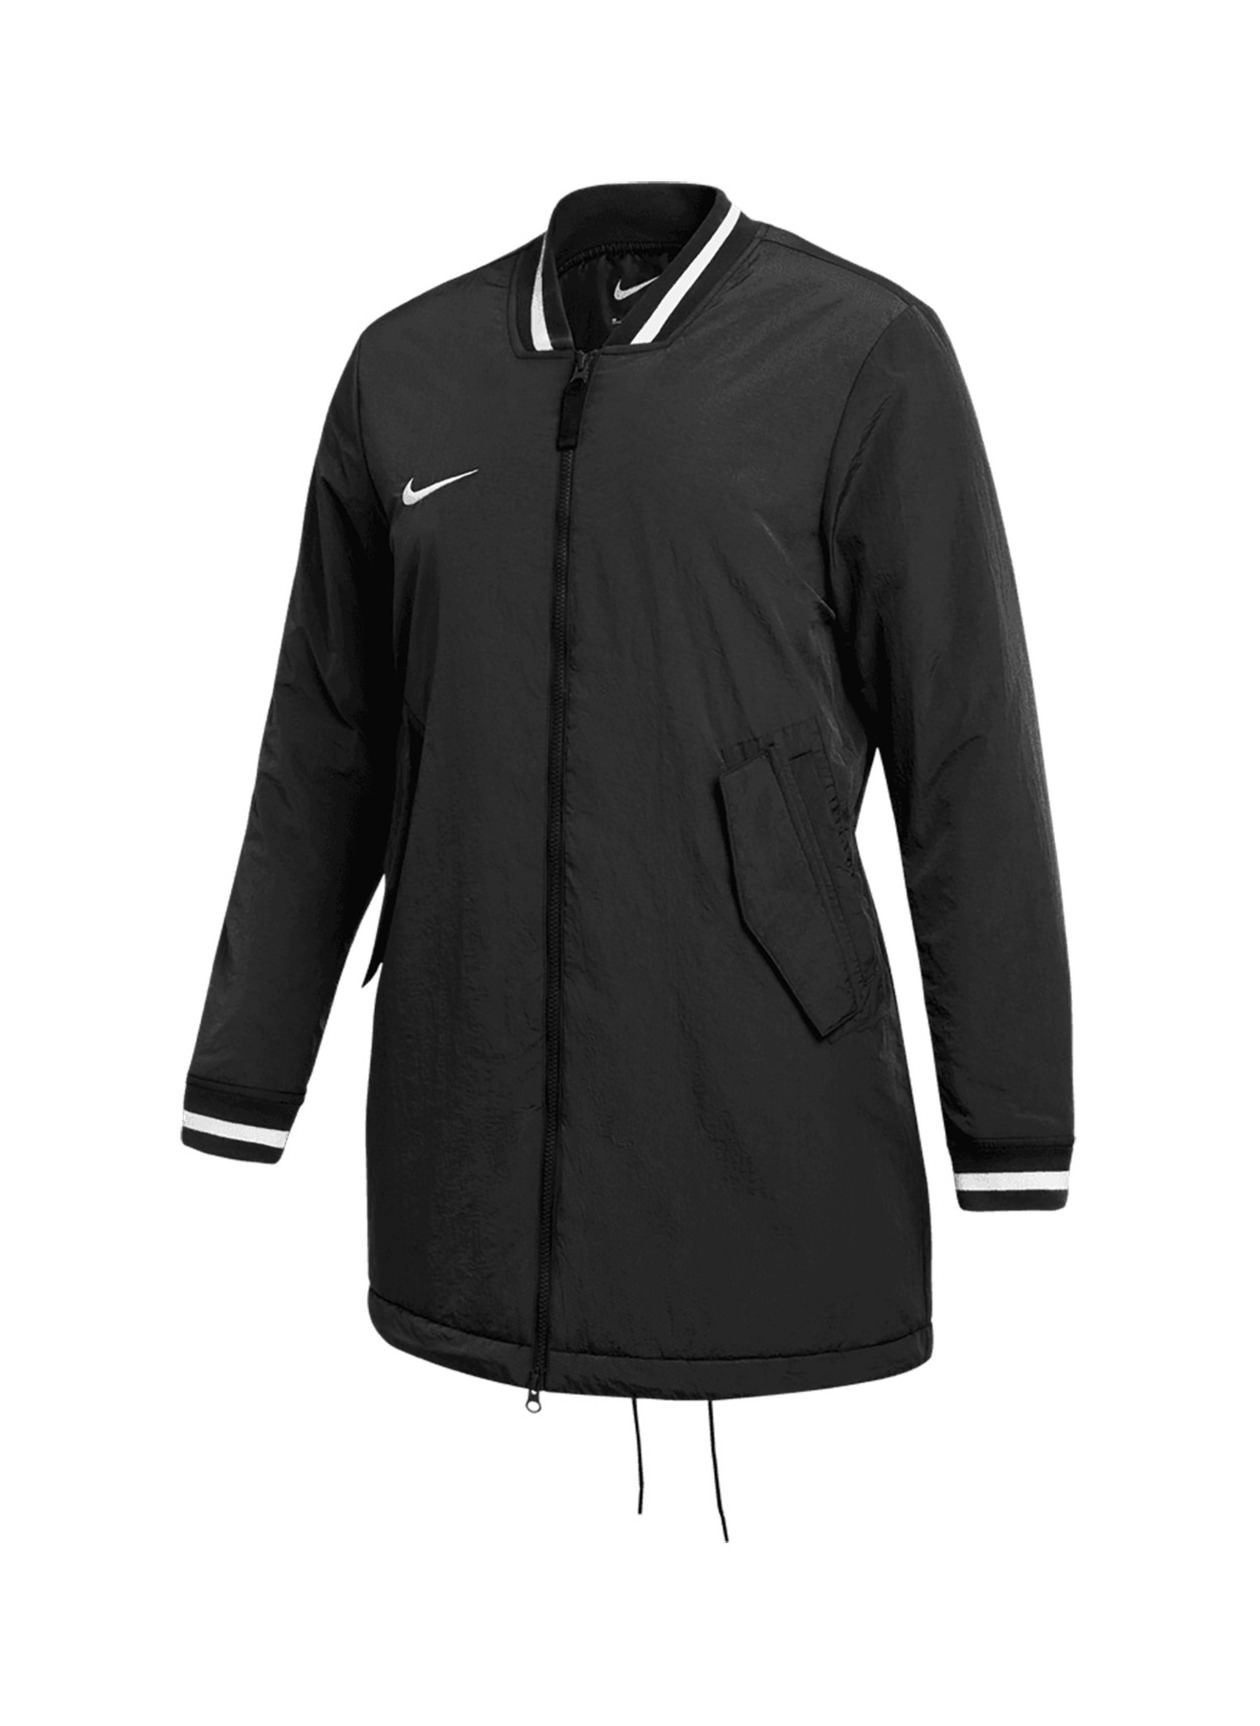 Men's Nike Letterman Jacket - Black/Anthracite/Wht - Size S